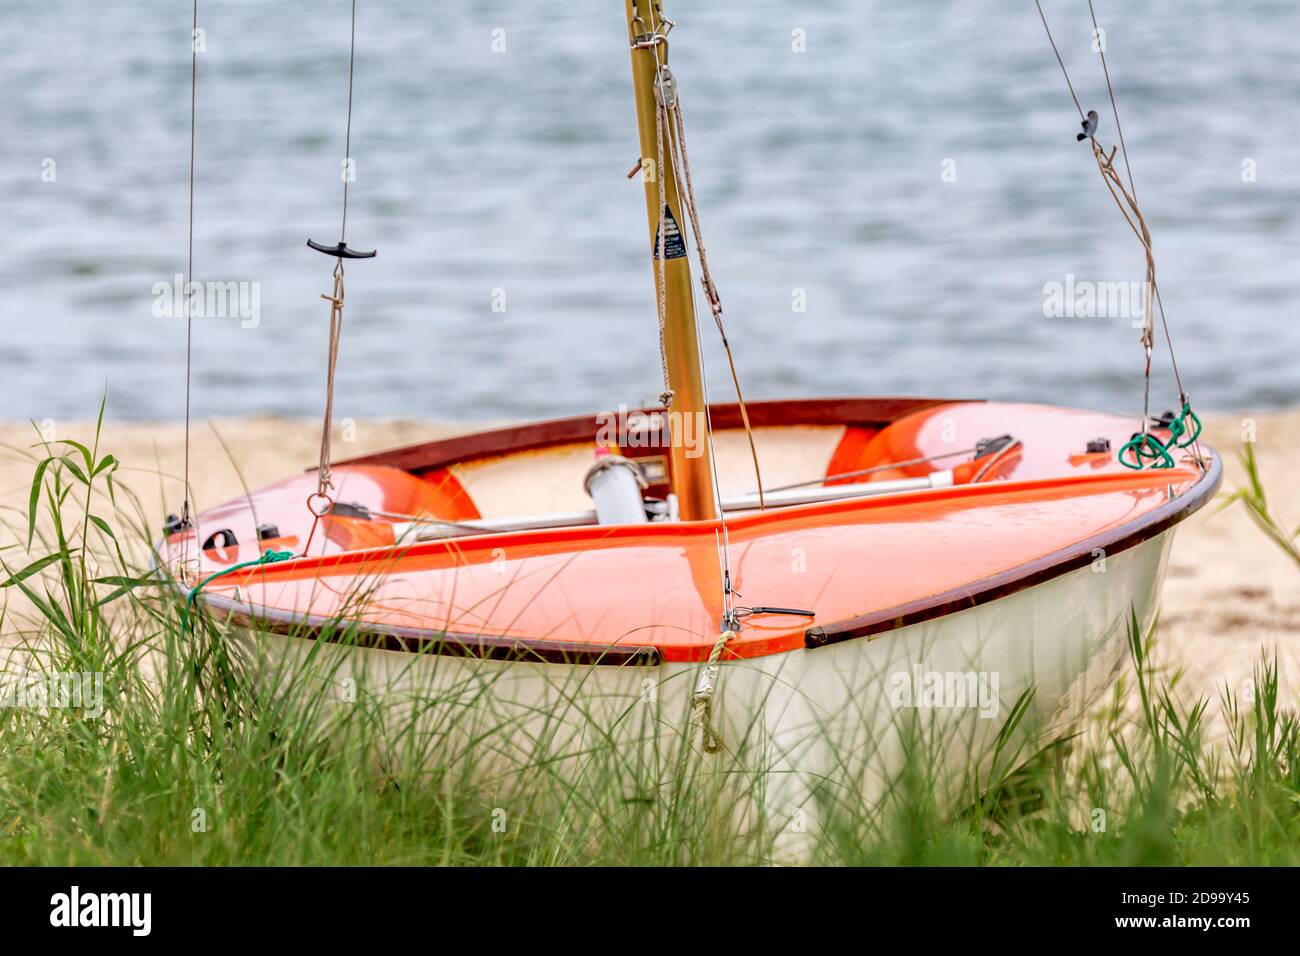 Sail boat on the Haven's beach in Sag Harbor, NY Stock Photo